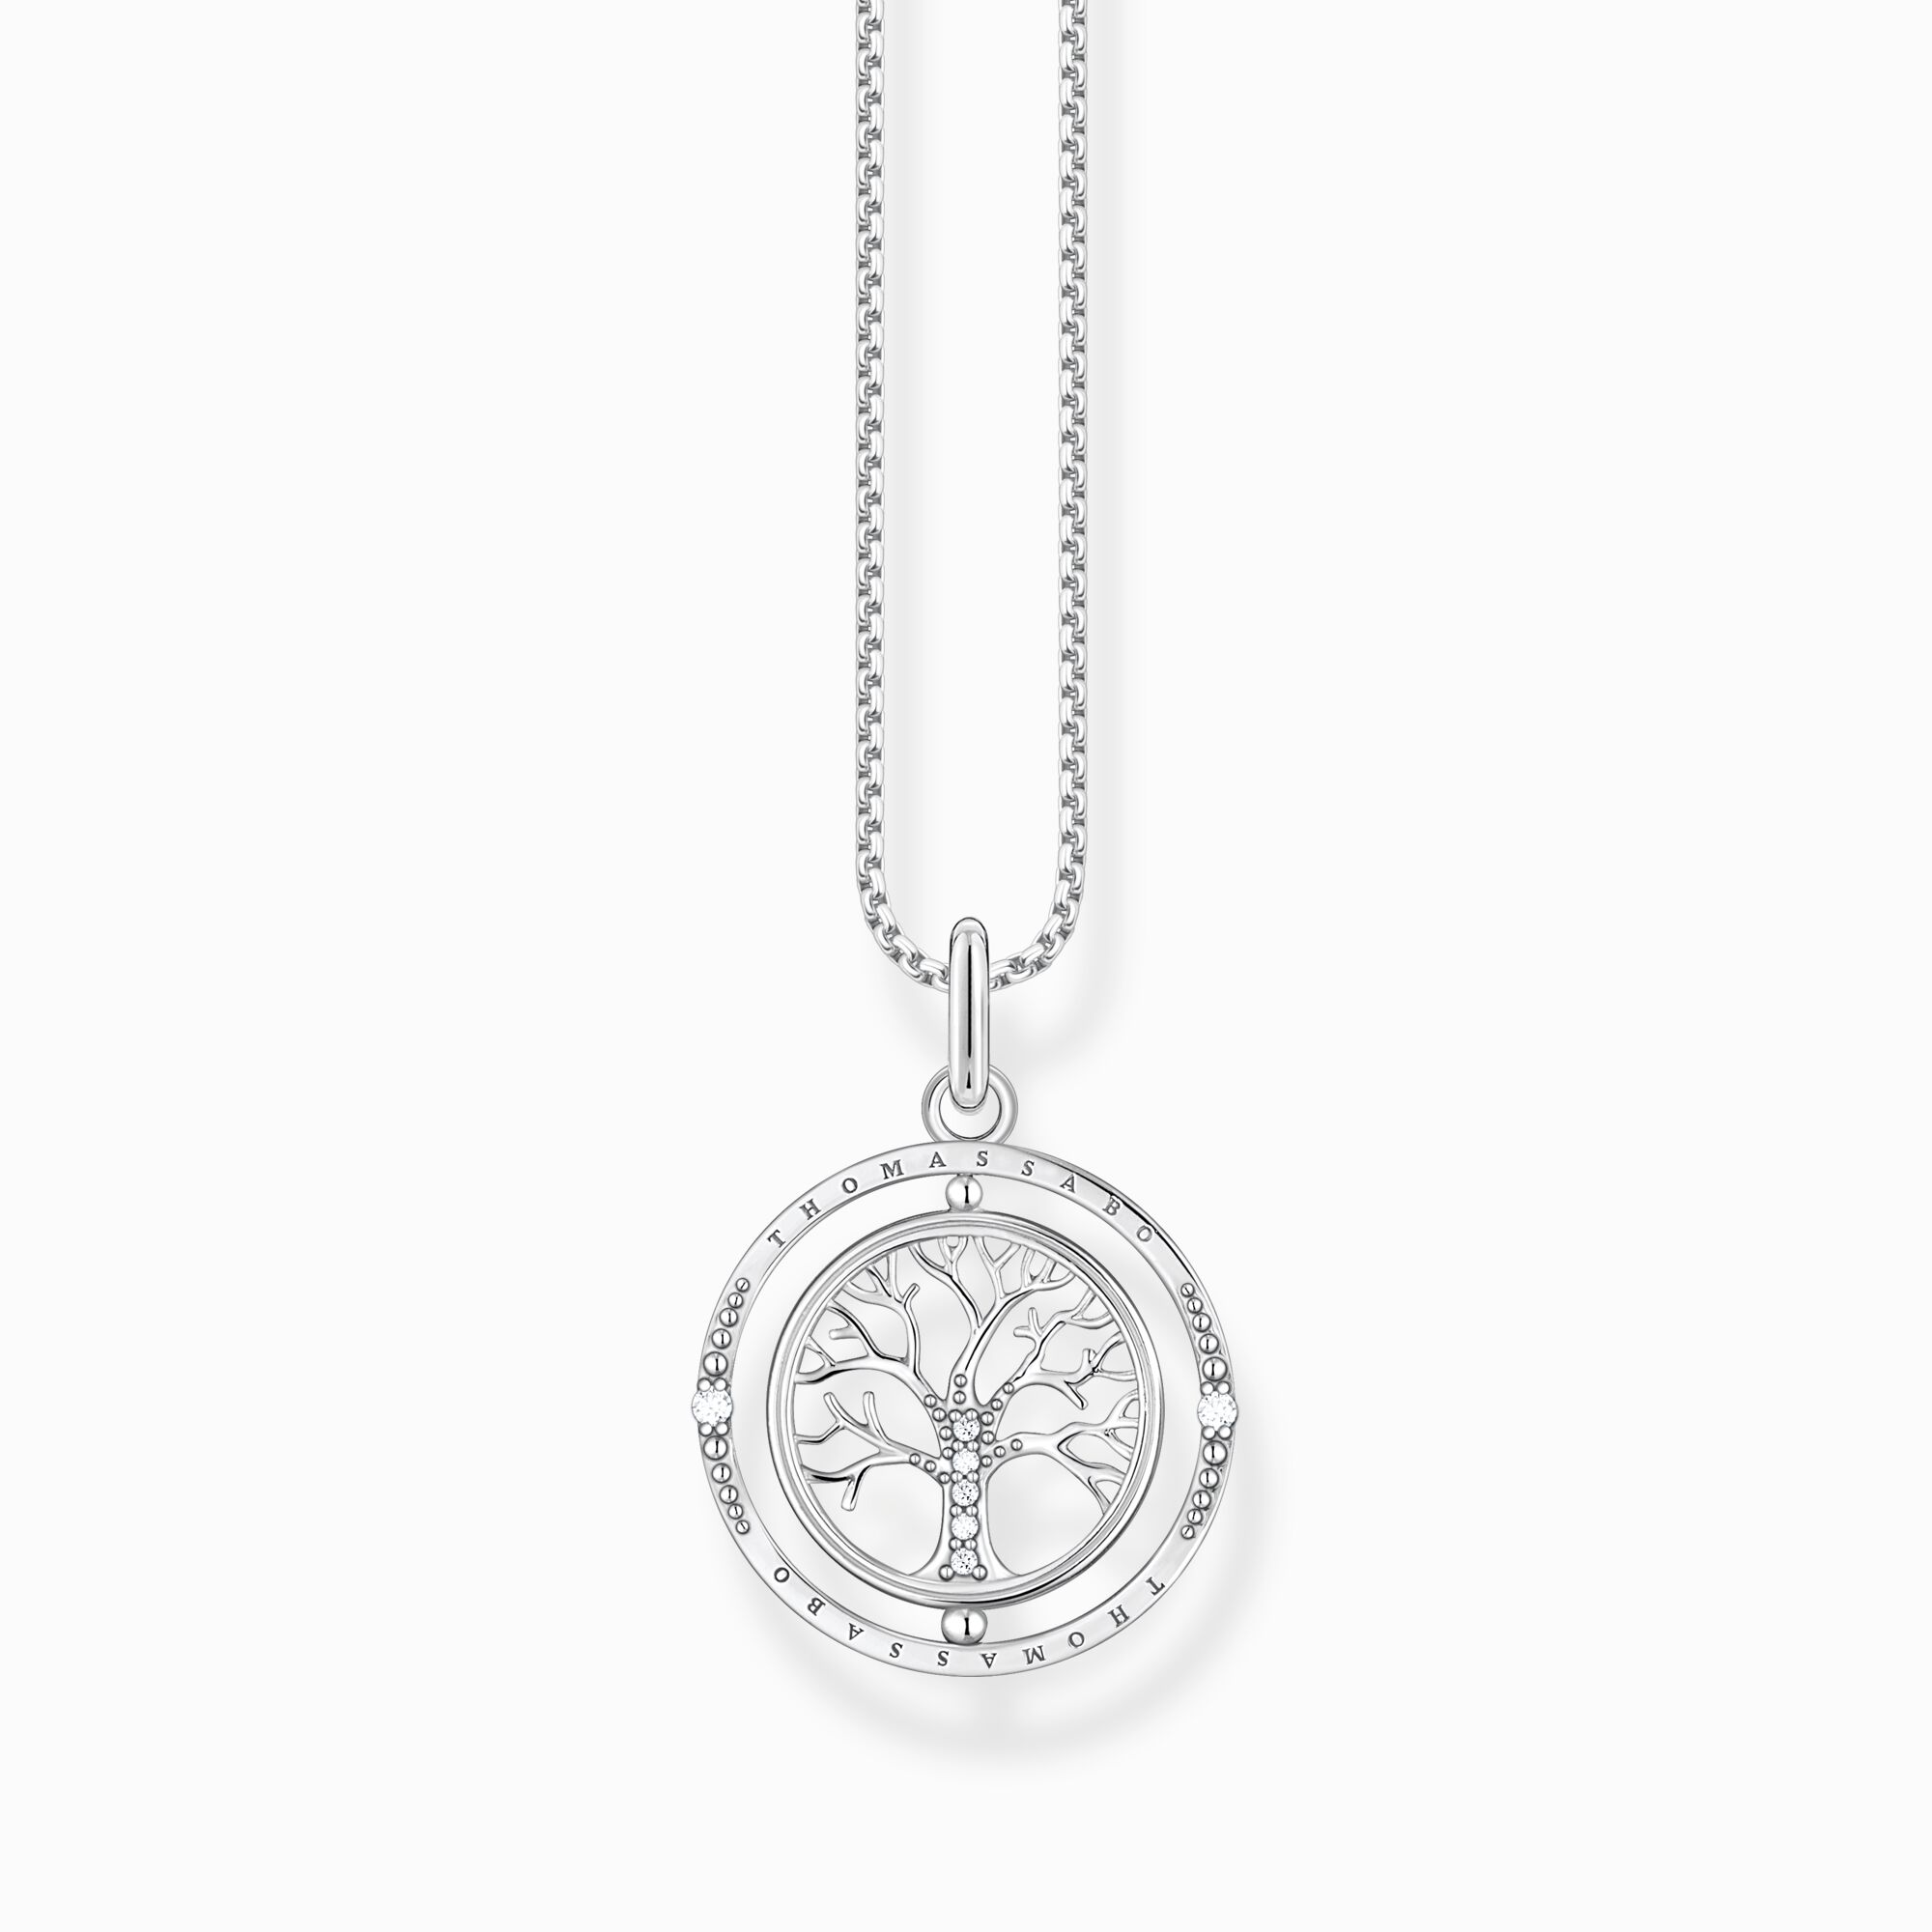 Halsband Tree of Love silver ur kollektionen  i THOMAS SABO:s onlineshop